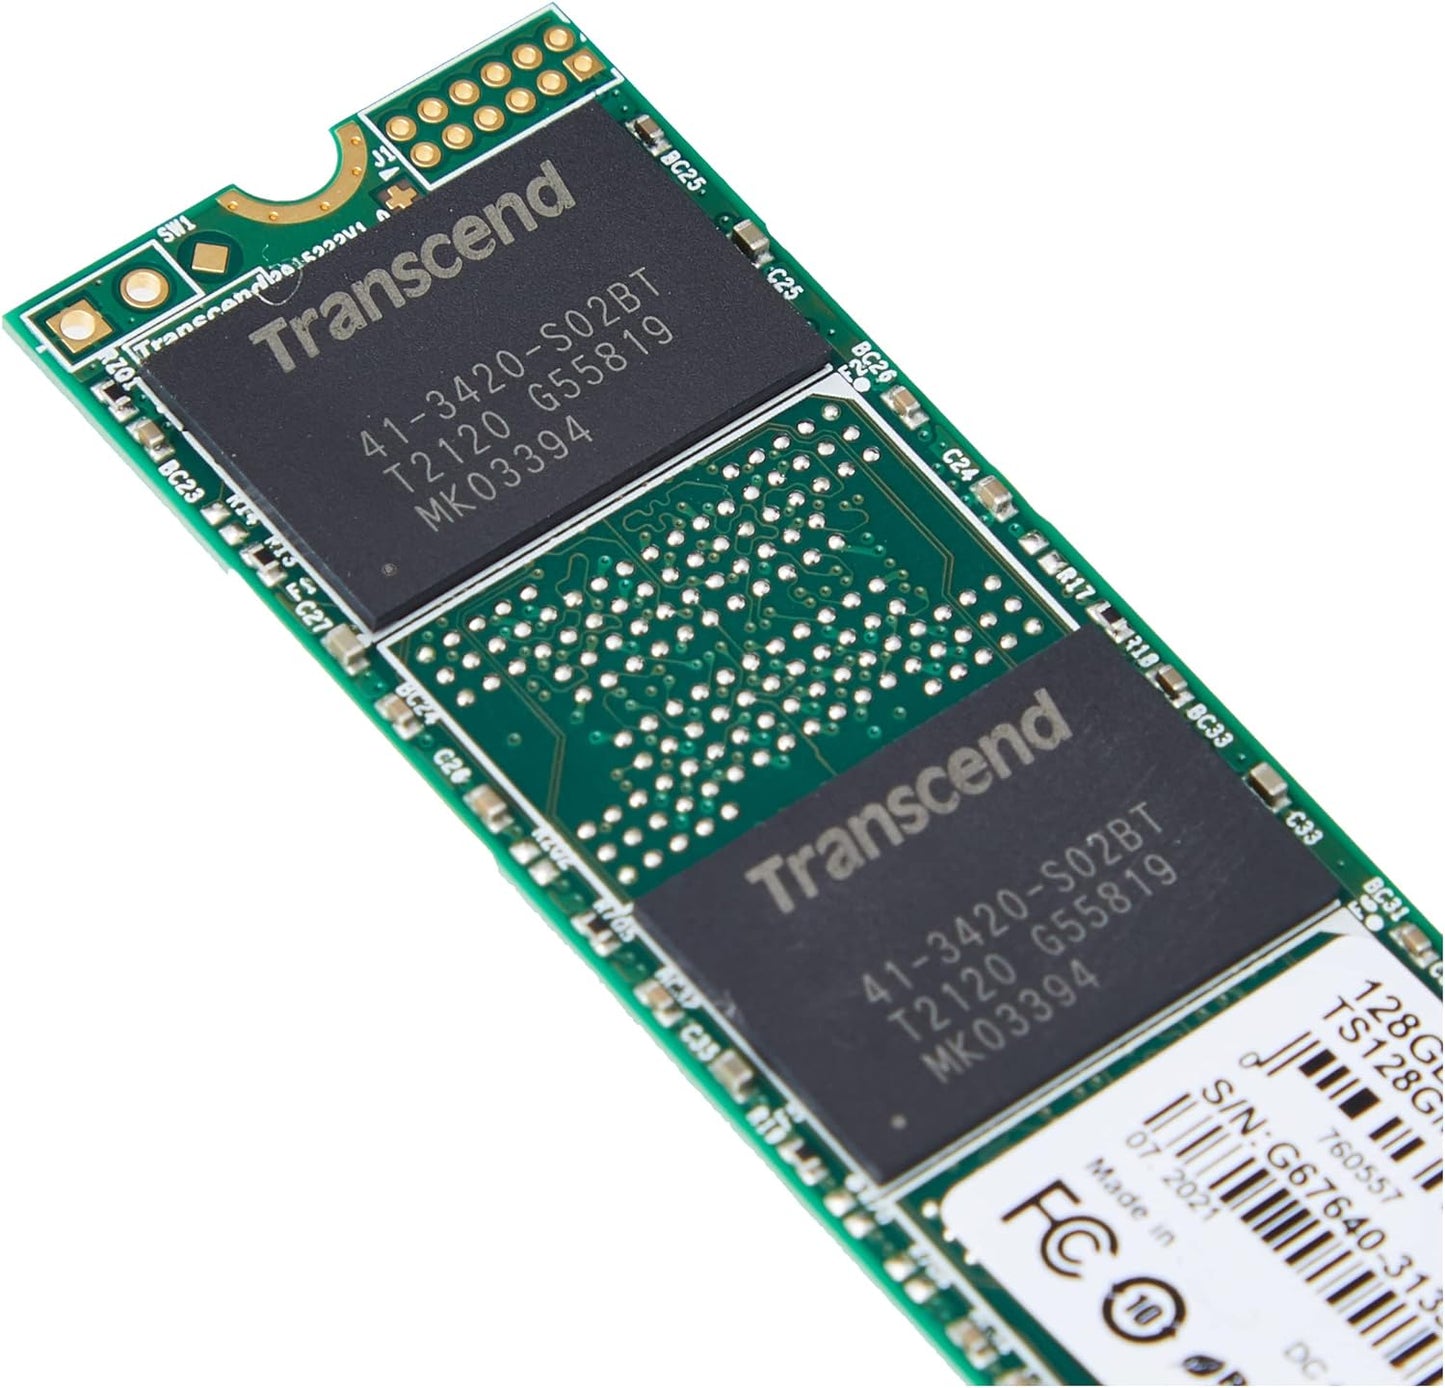 Transcend 128GB SSD M.2 2280 PCIe NVMe MTE110S Internal Hard Drive (Brand New)